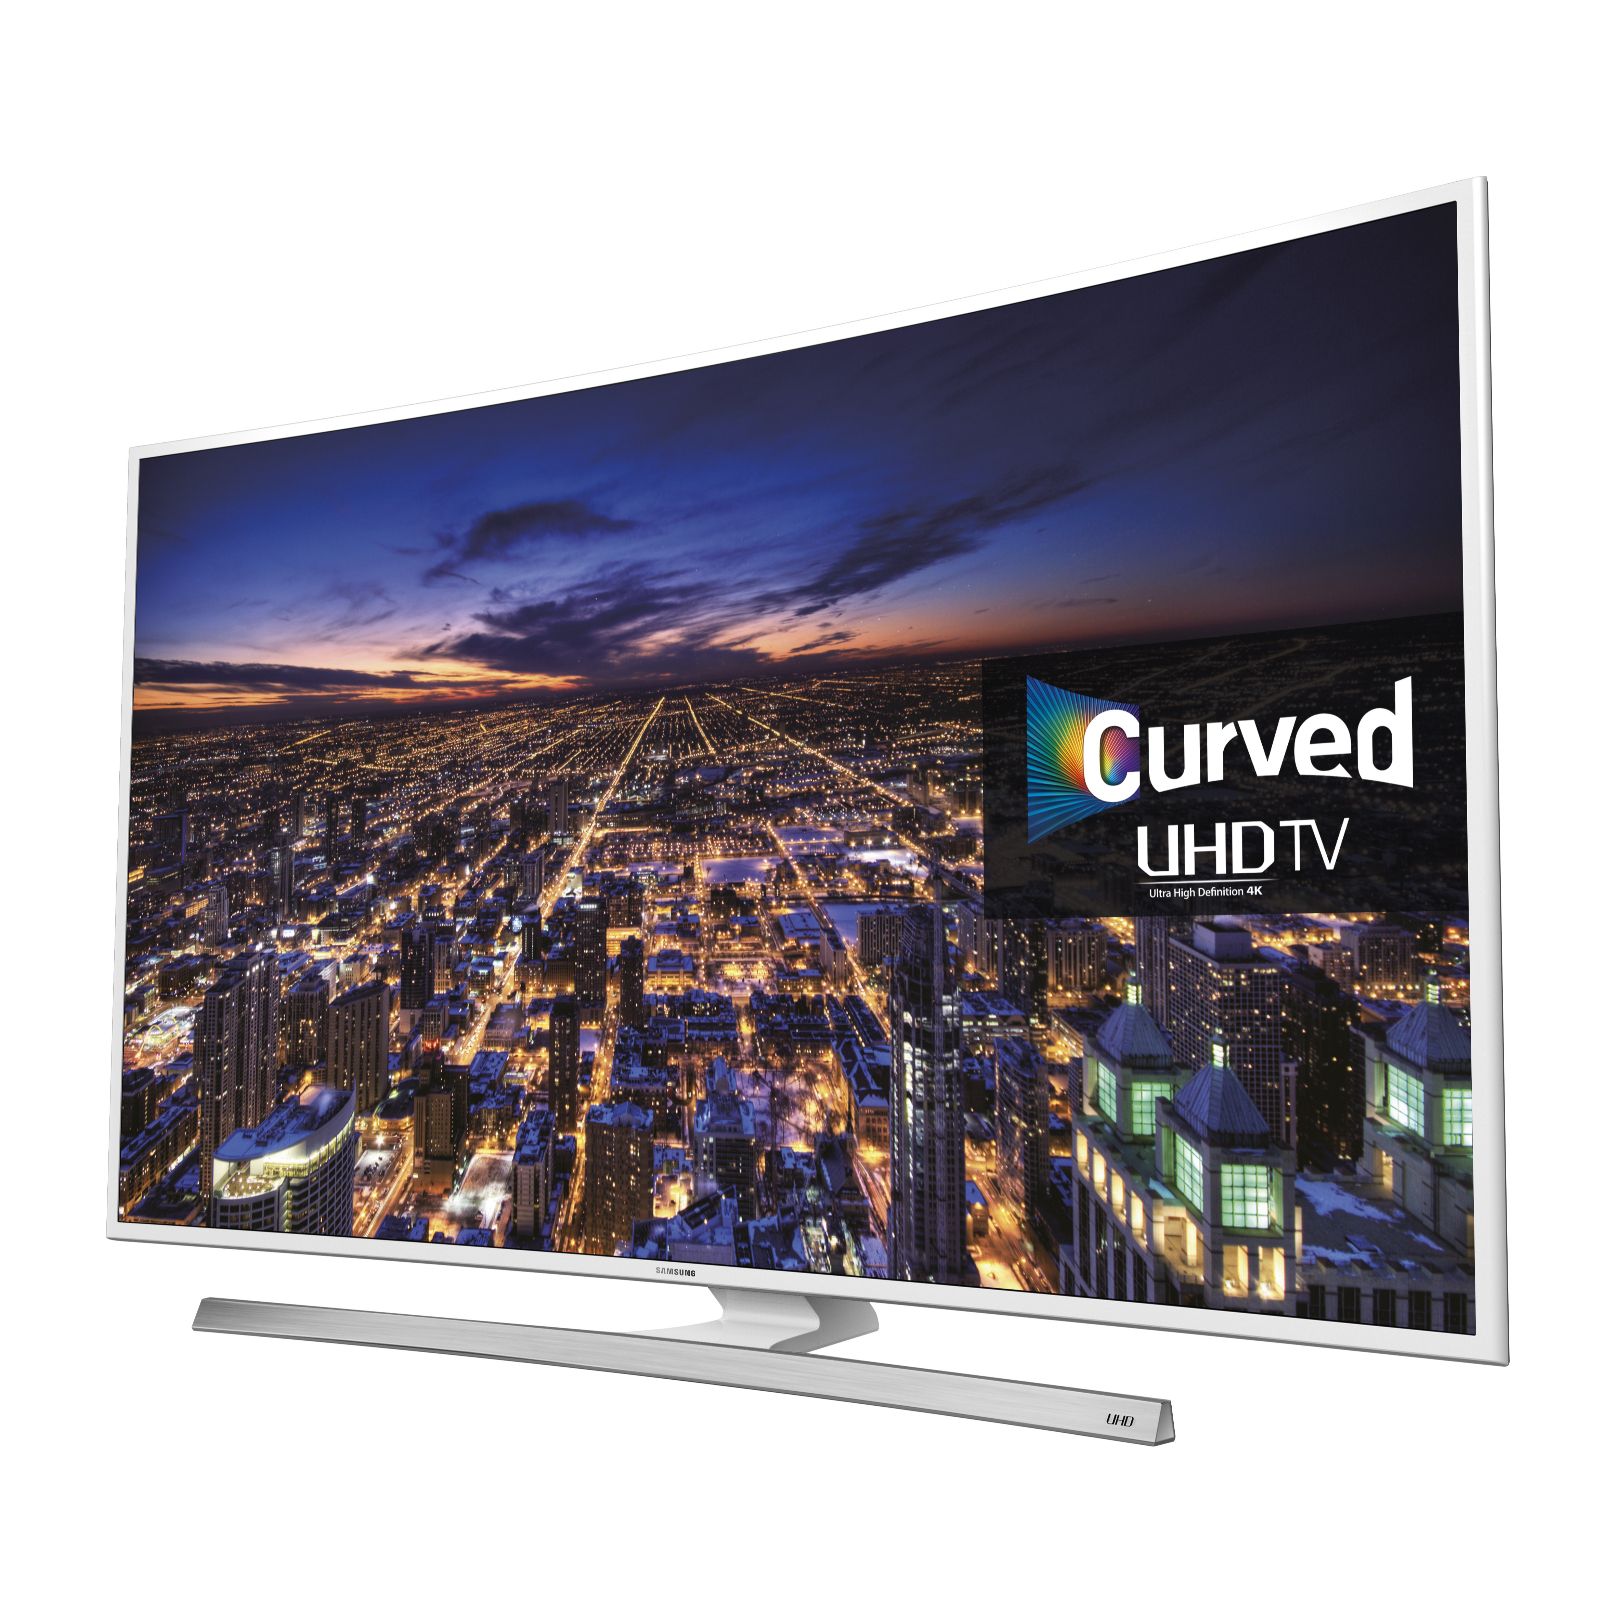 Samsung JU6510 6 Series 55"  Curved UHD Smart LED TV